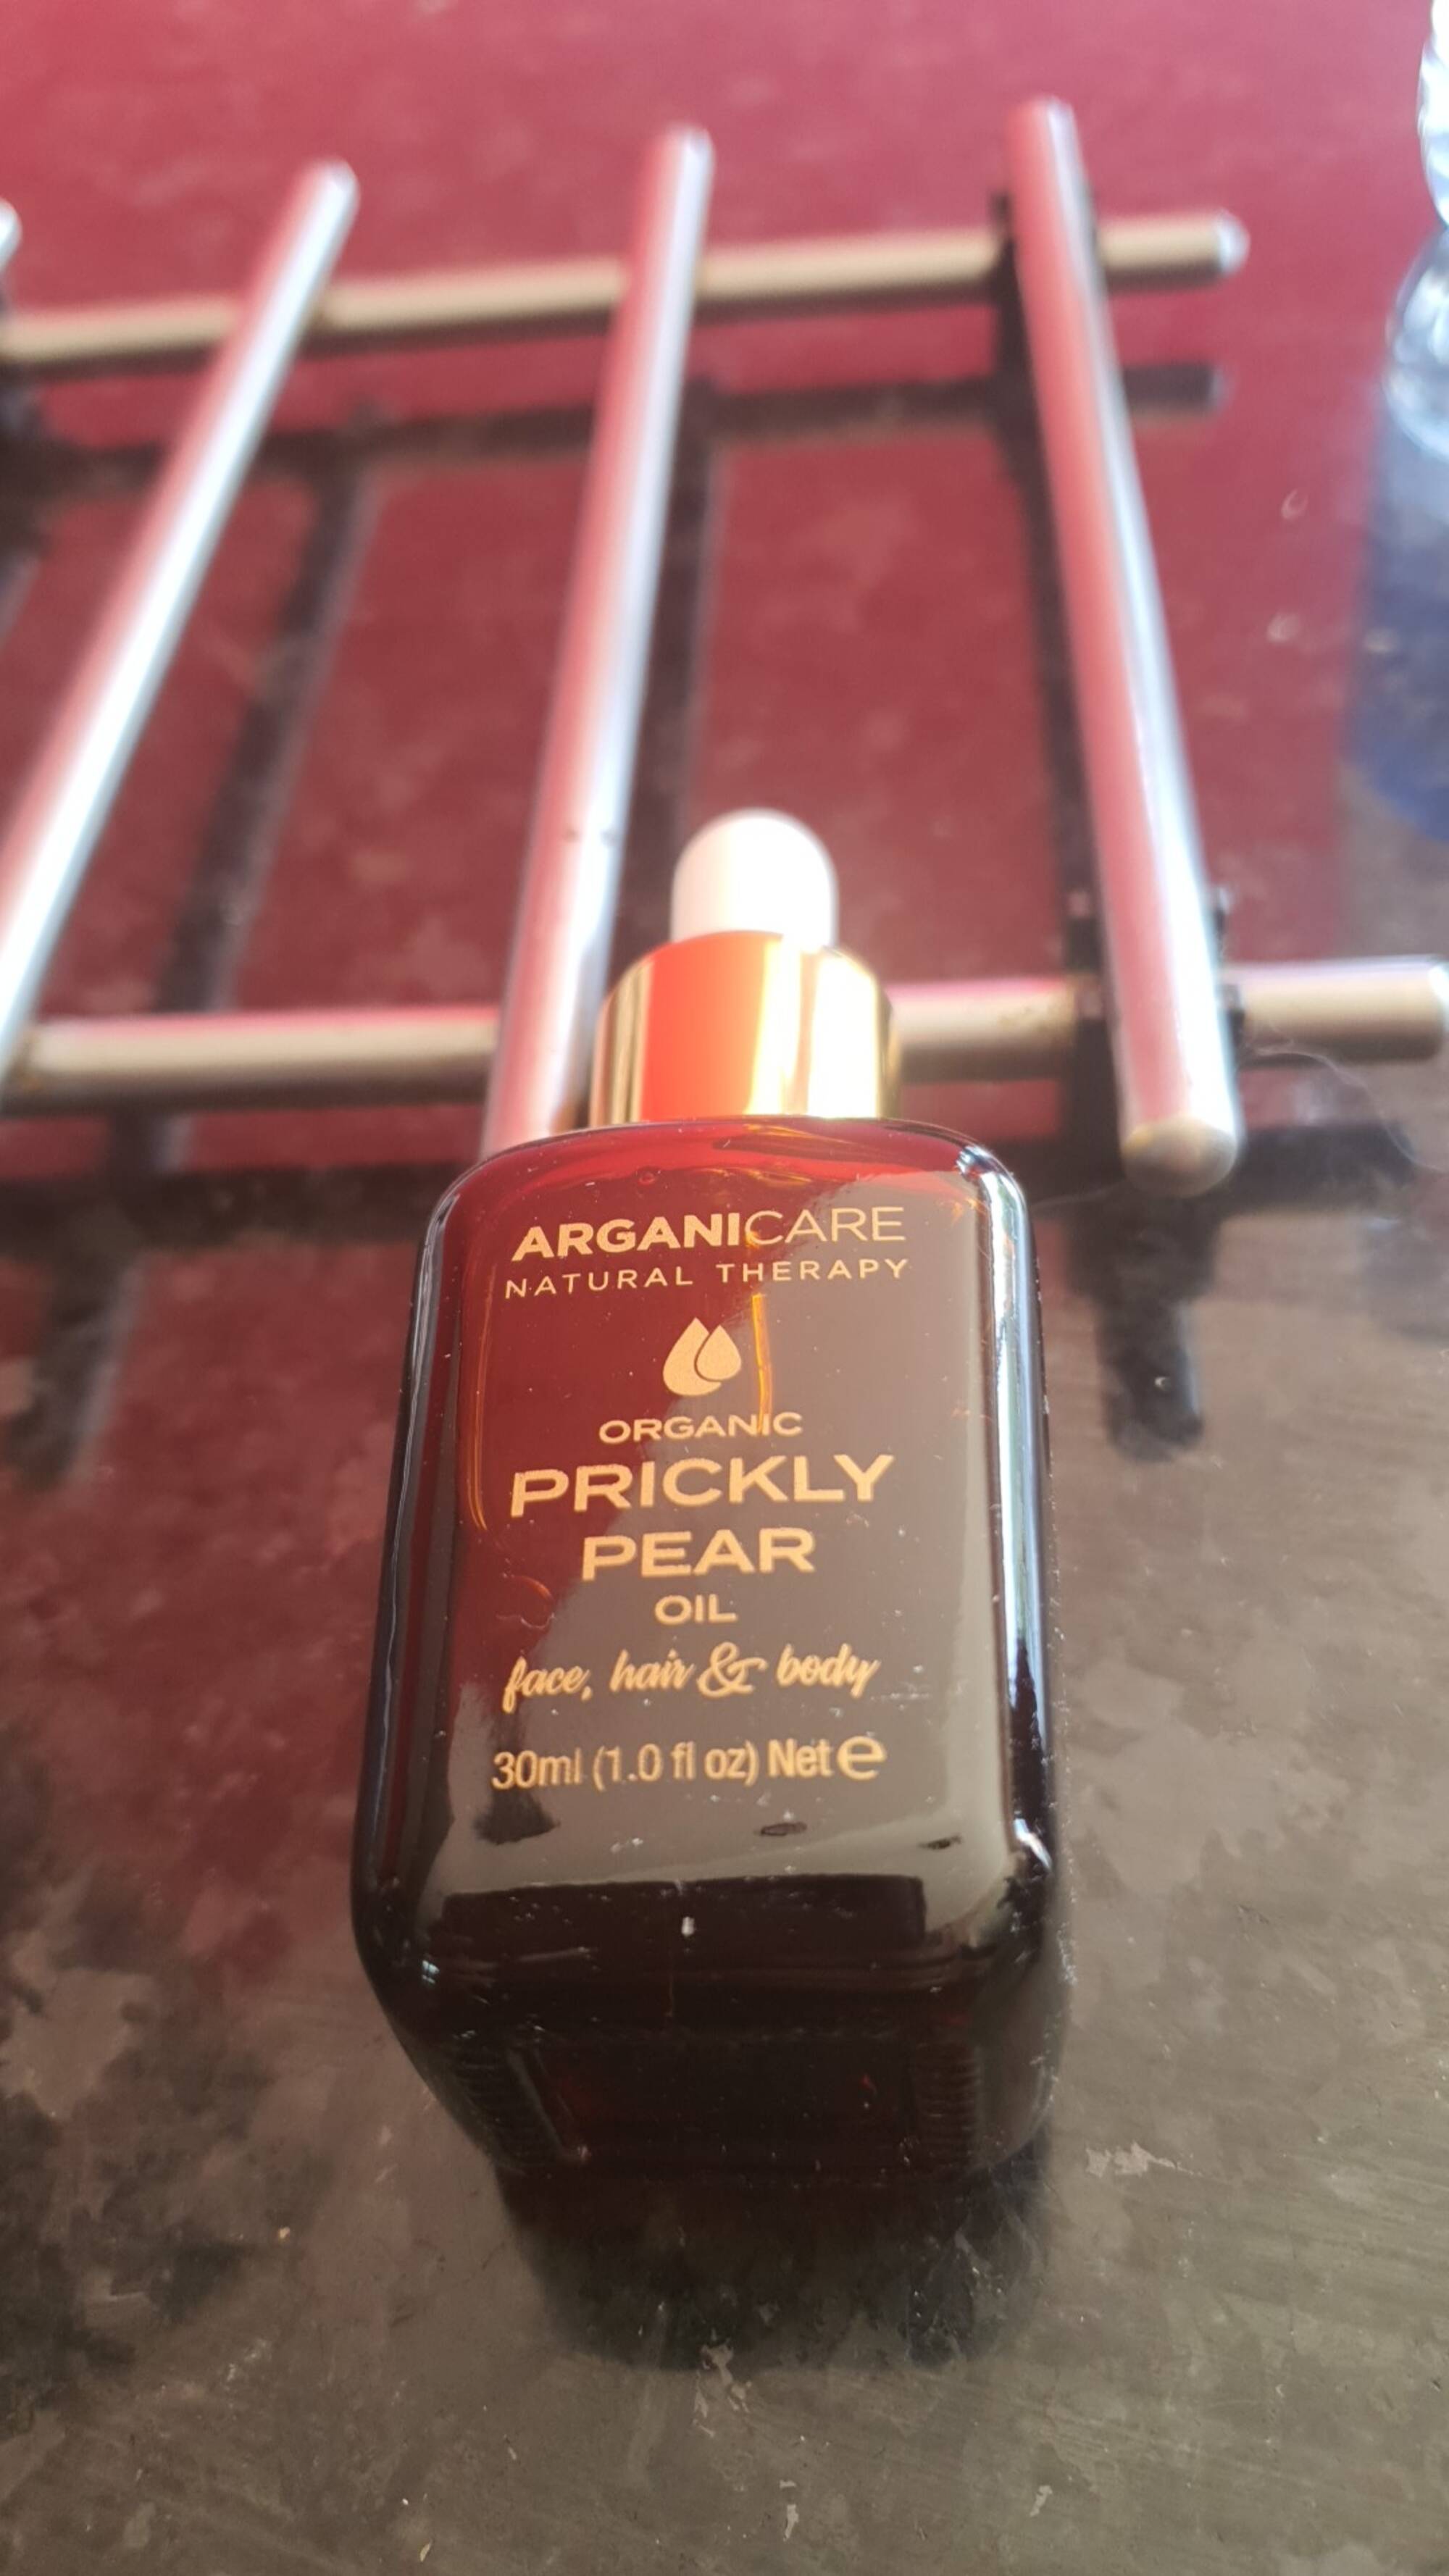 ARGANICARE - Organic prickly pear oil face, hair & body